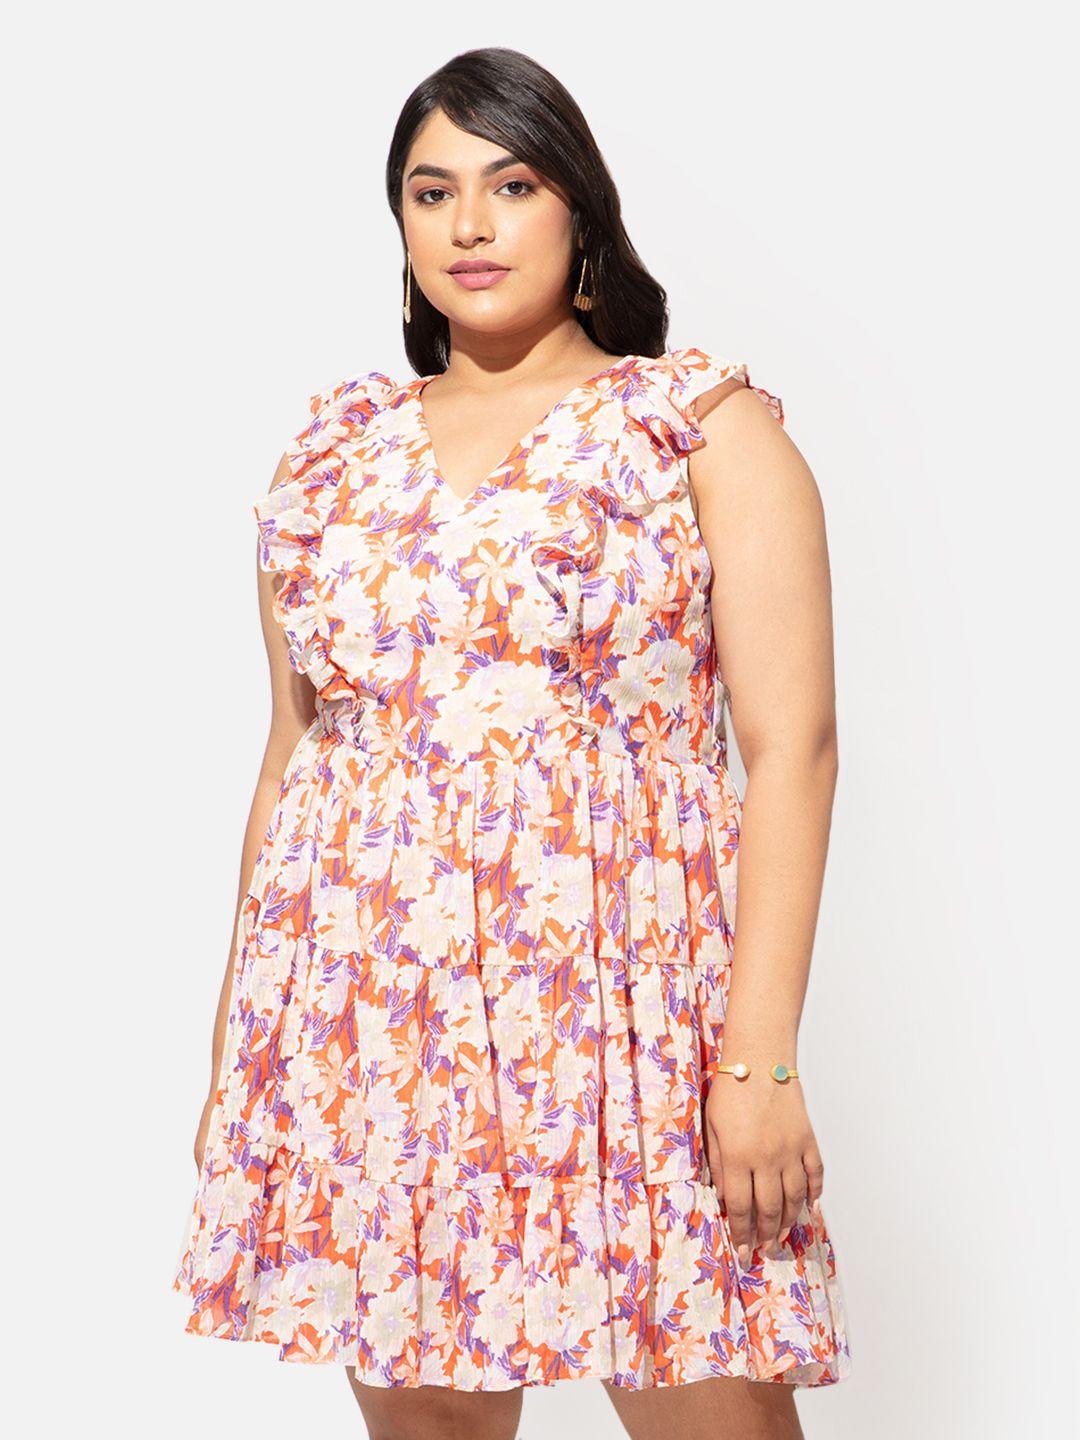 20dresses peach-coloured floral chiffon dress